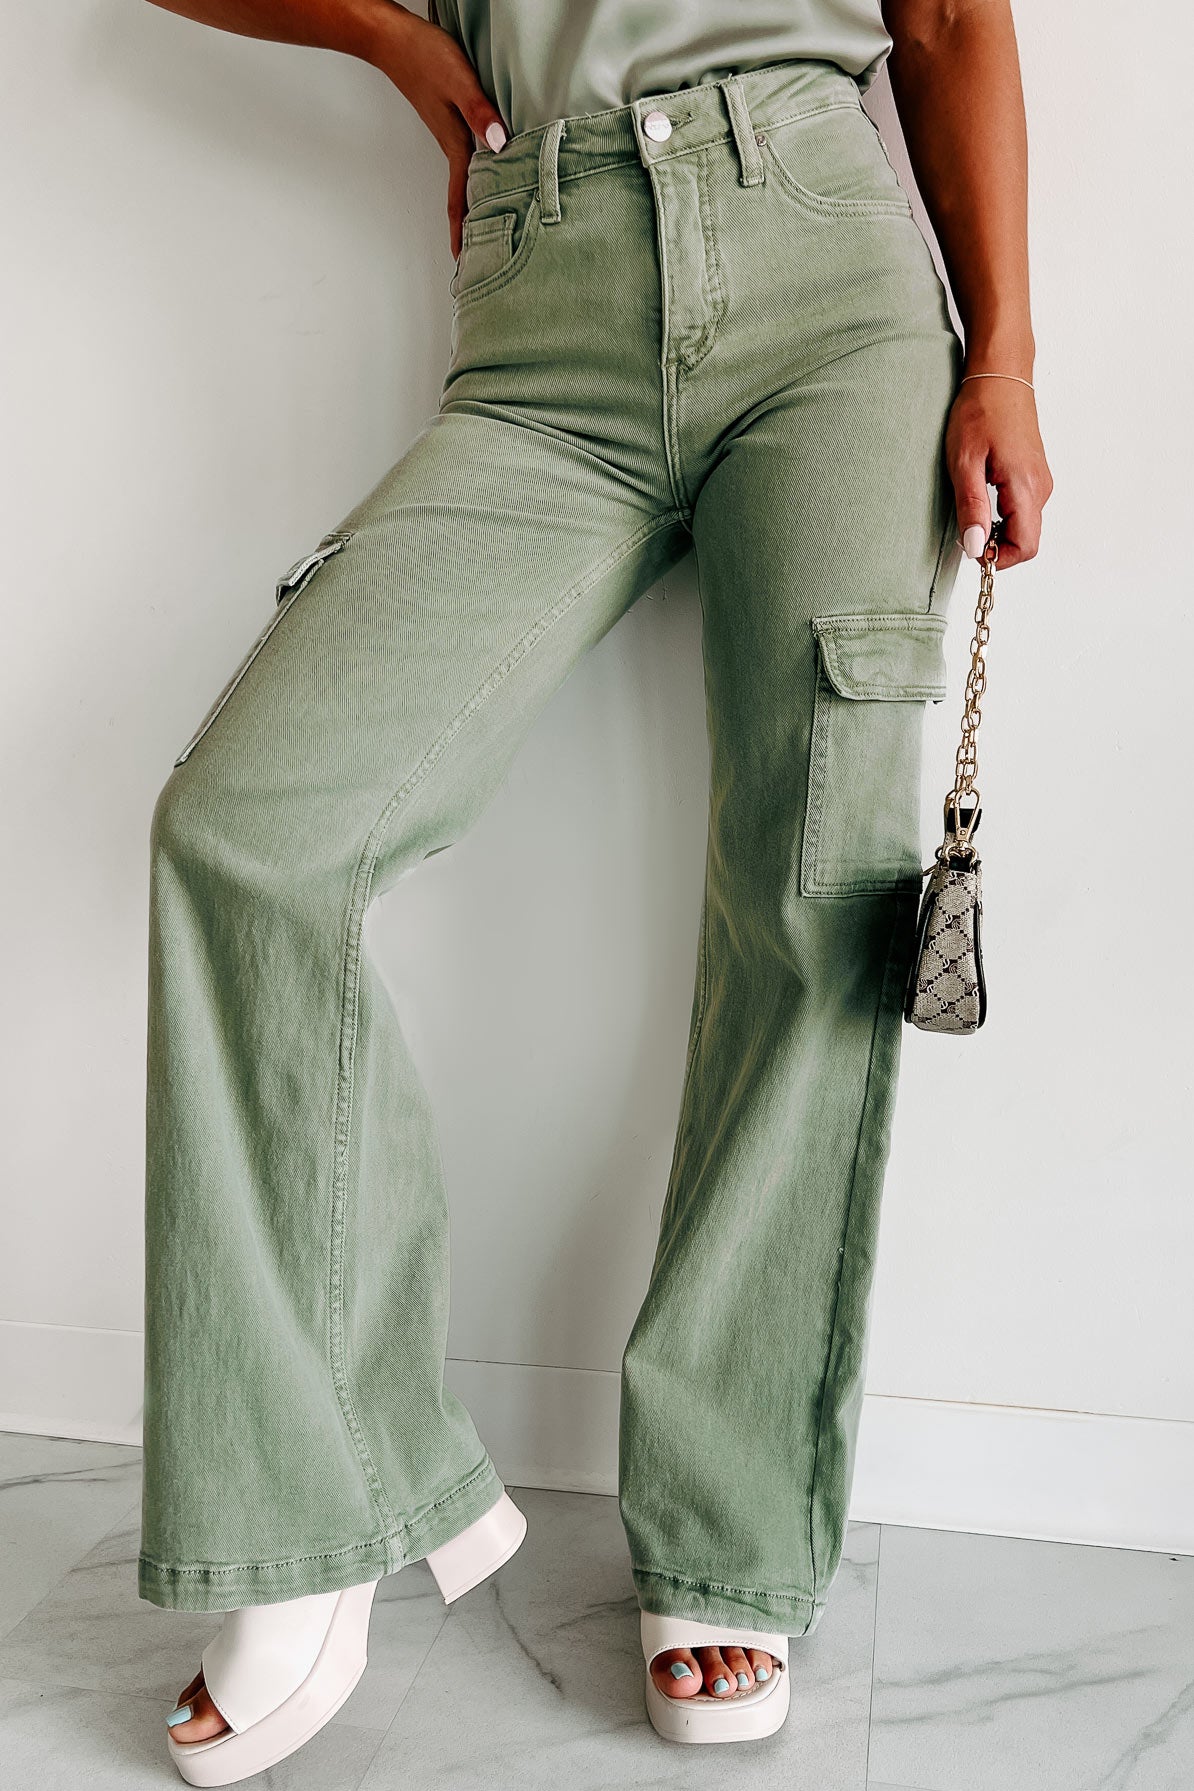 High Waisted Zip Up Cargo Jeans  Green pants women, Cargo pants